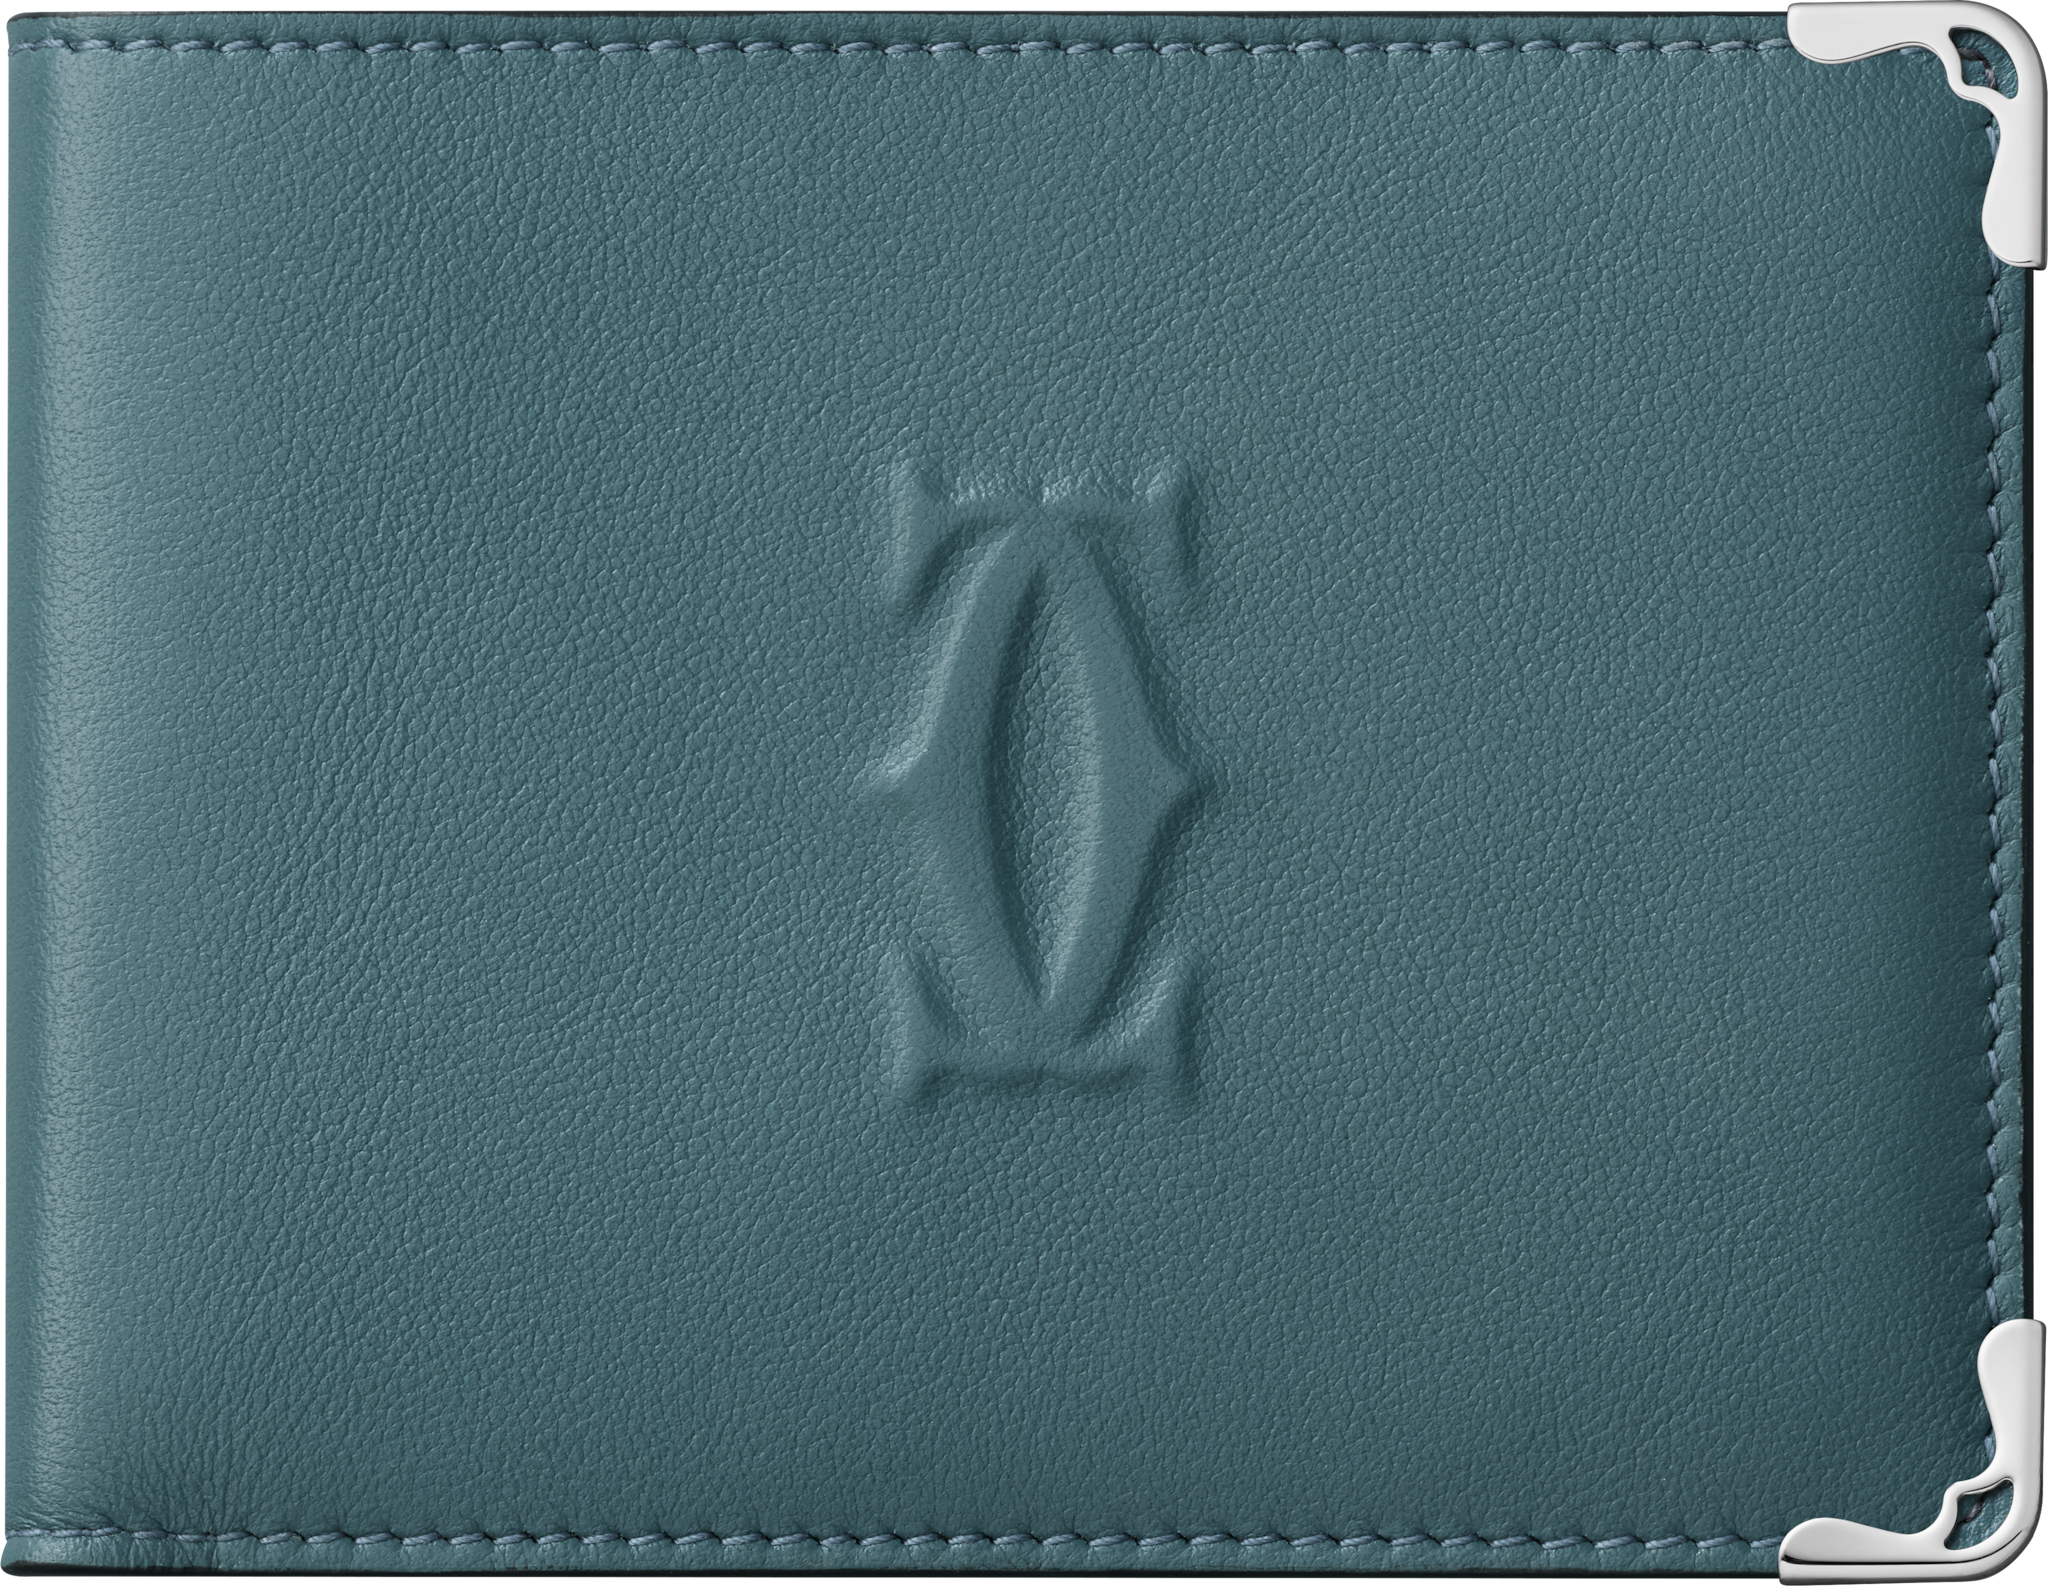 Six-credit card wallet, Must de CartierSteel grey calfskin, palladium finish